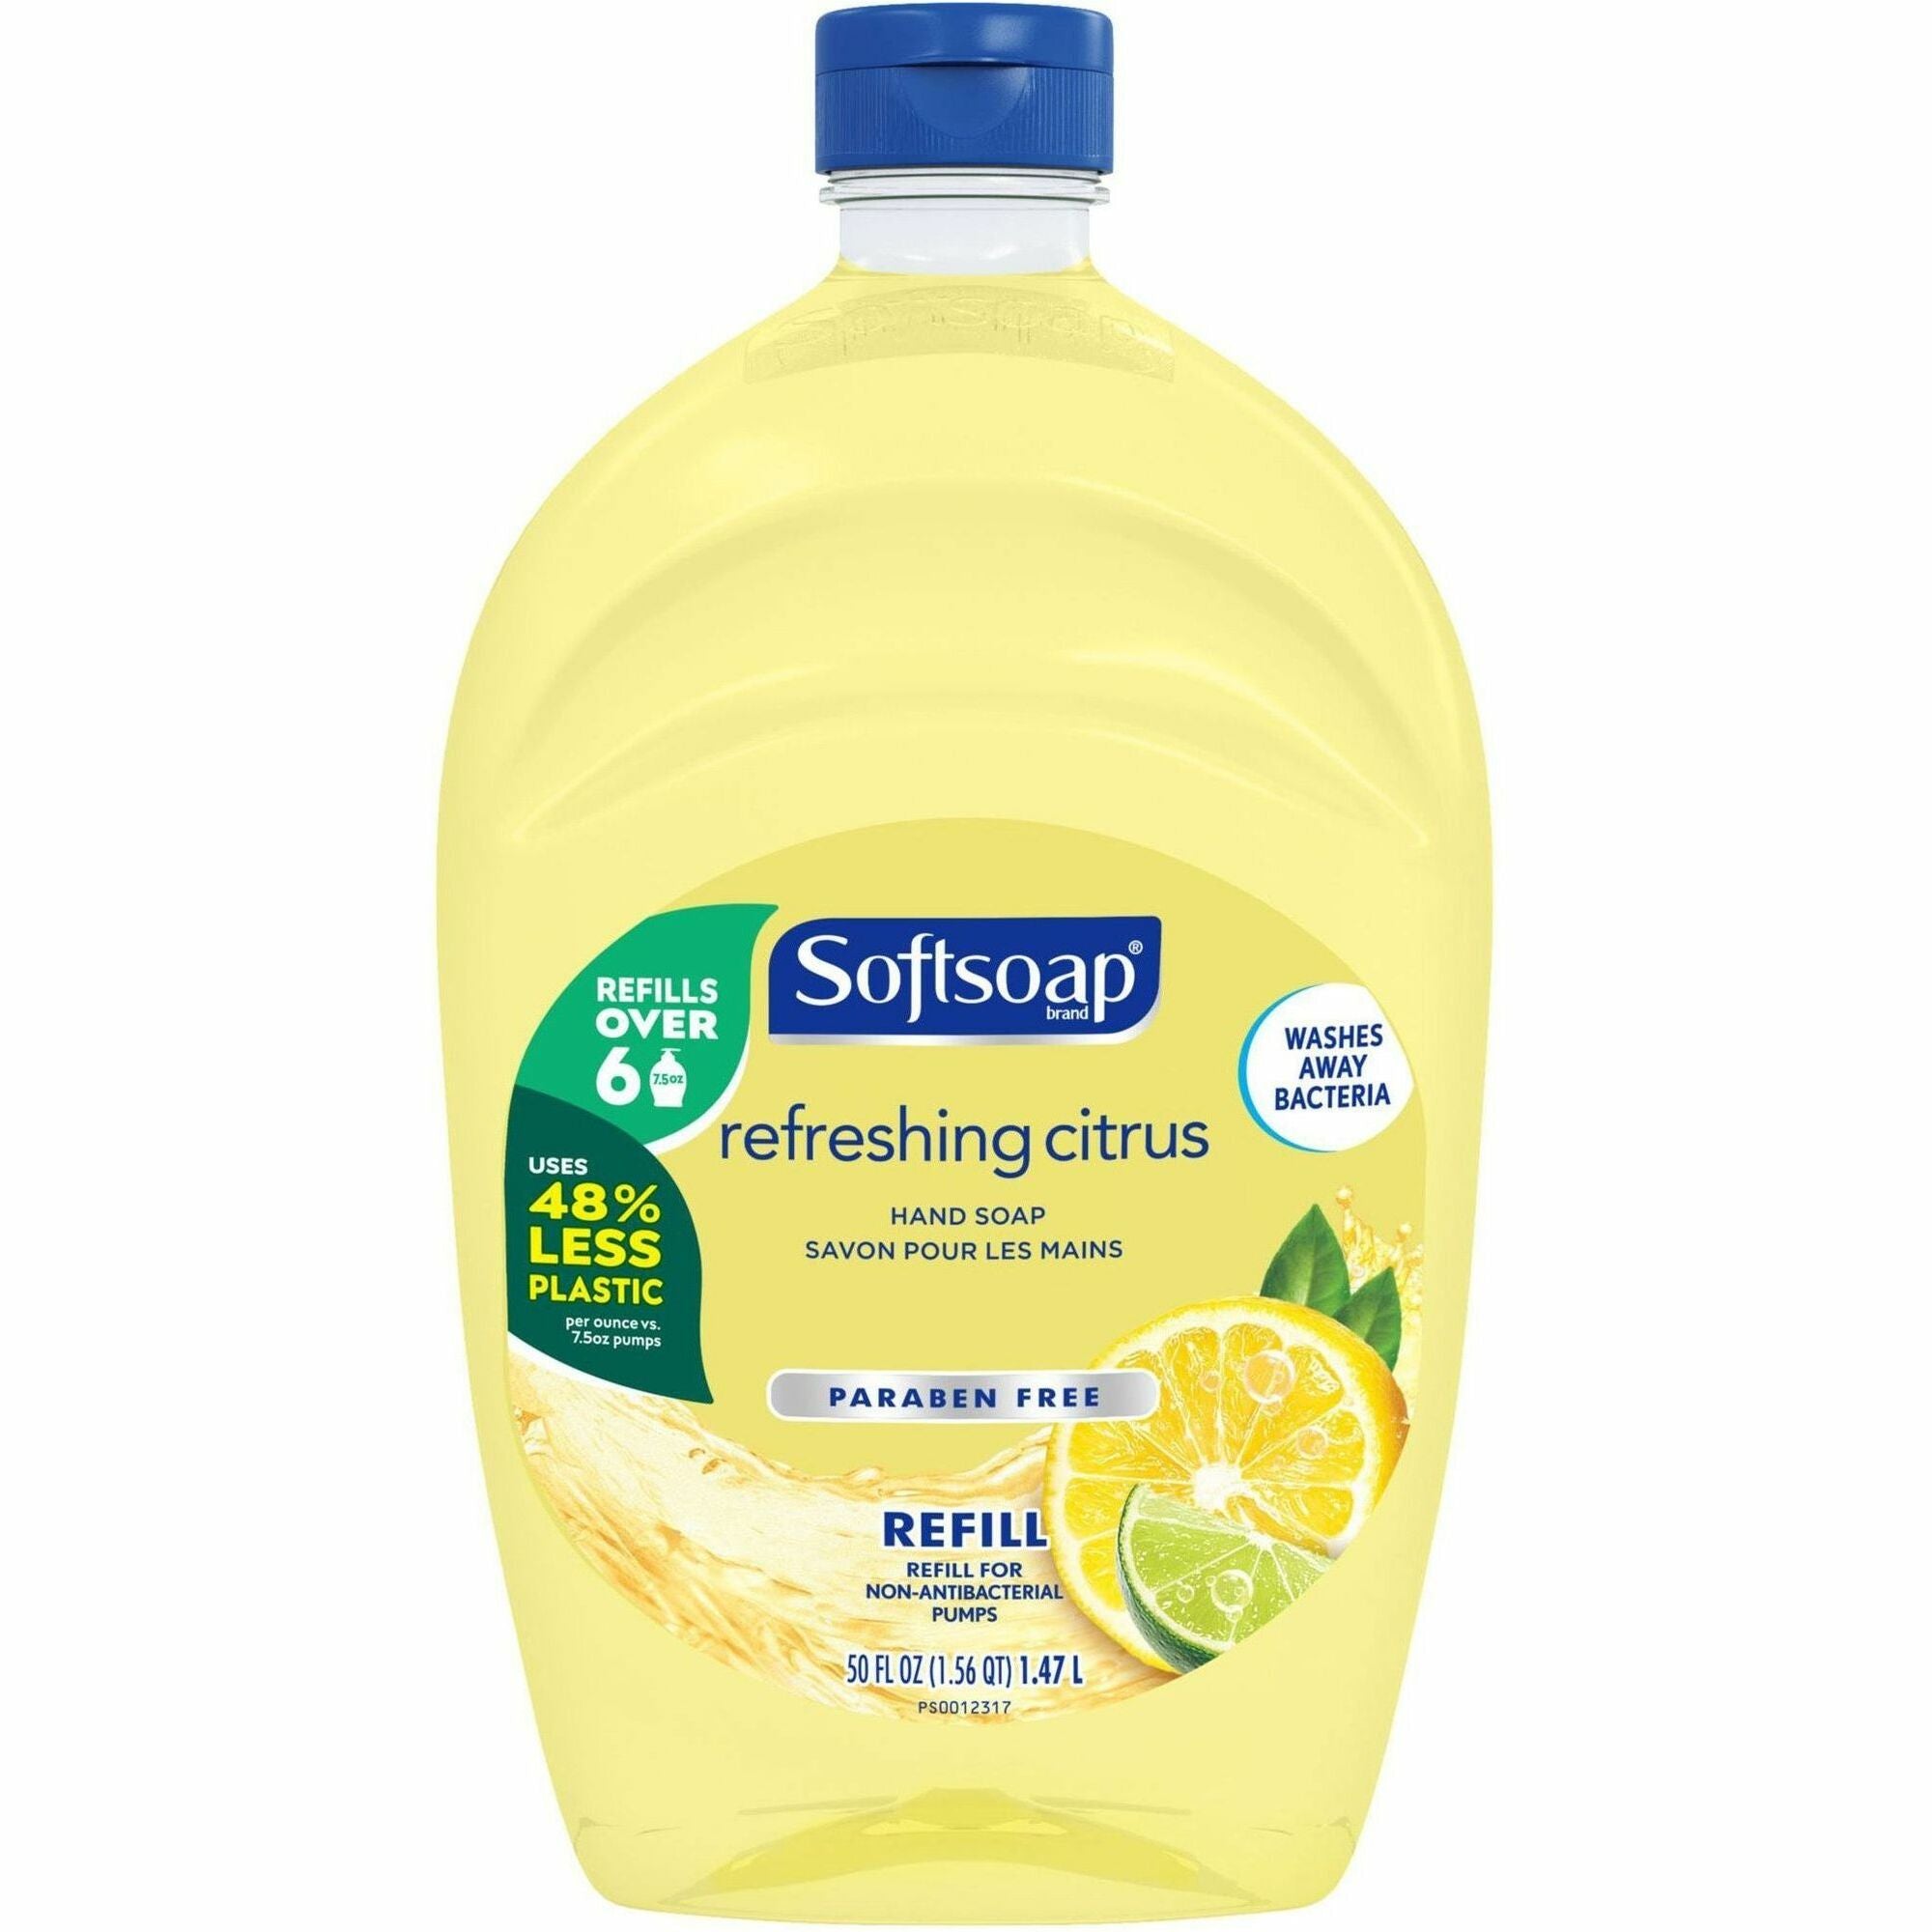 softsoap-citrus-hand-soap-refill-fresh-citrus-scentfor-50-fl-oz-14787-ml-bottle-dispenser-dirt-remover-bacteria-remover-residue-remover-hand-yellow-residue-free-non-sticky-1-each_cpc07336 - 1